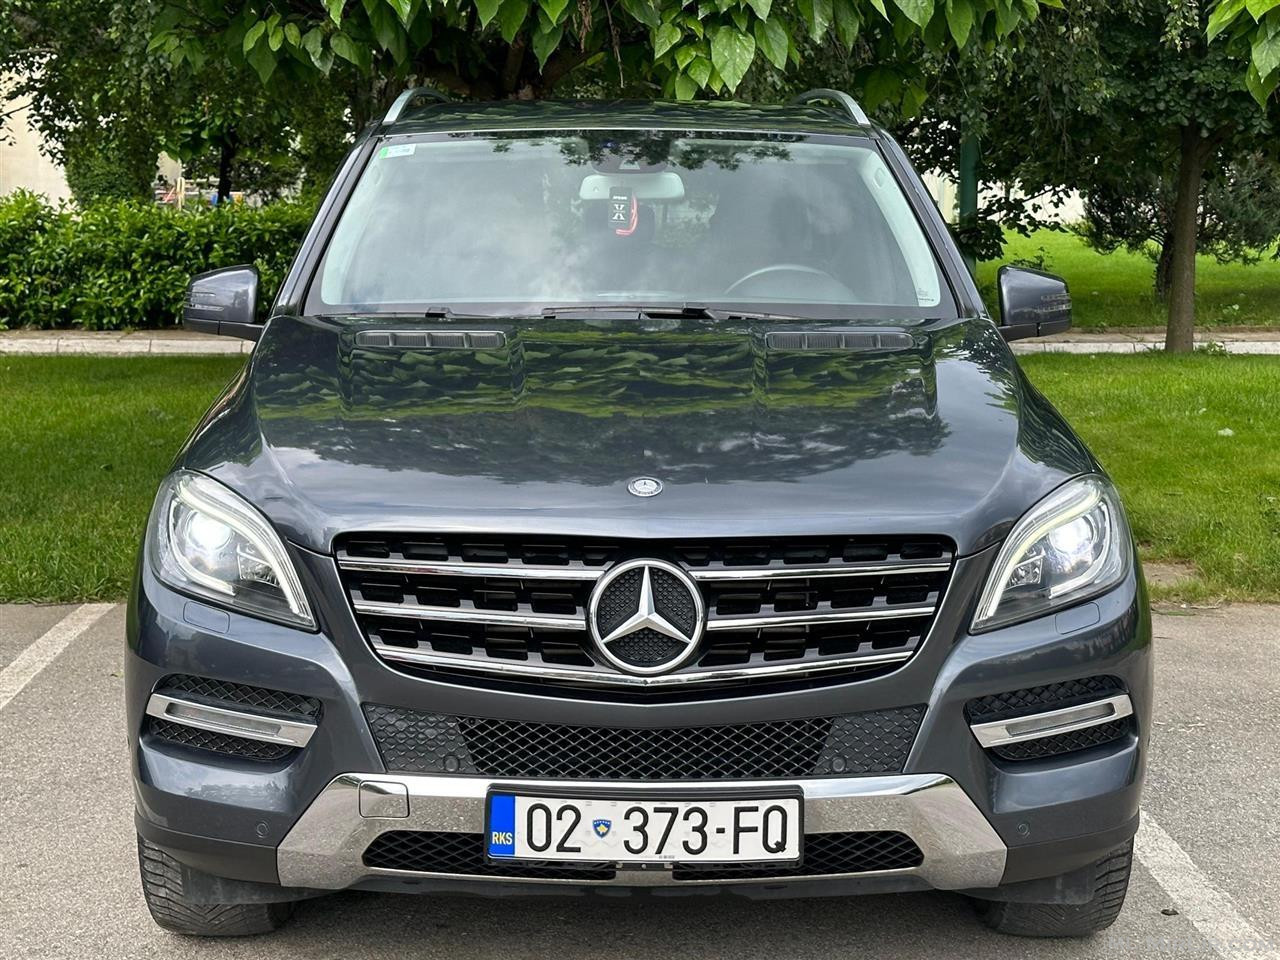 Mercedes ML 250 CDI 4MATIC 12/2013 Sapo Doganuar